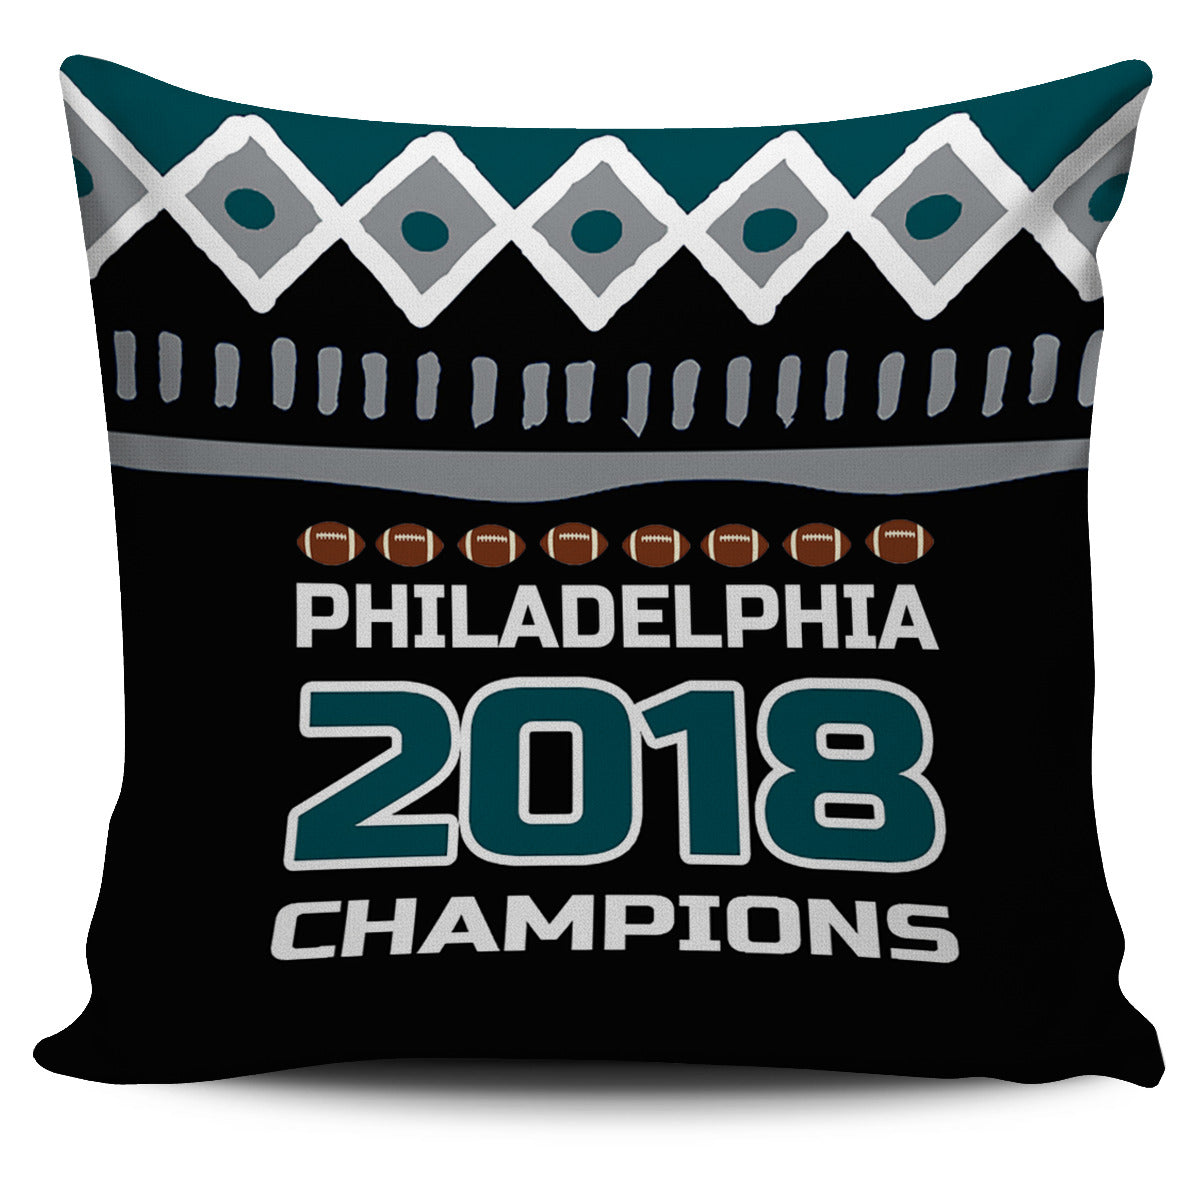 Philadelphia 2018 Champs Pillow Case